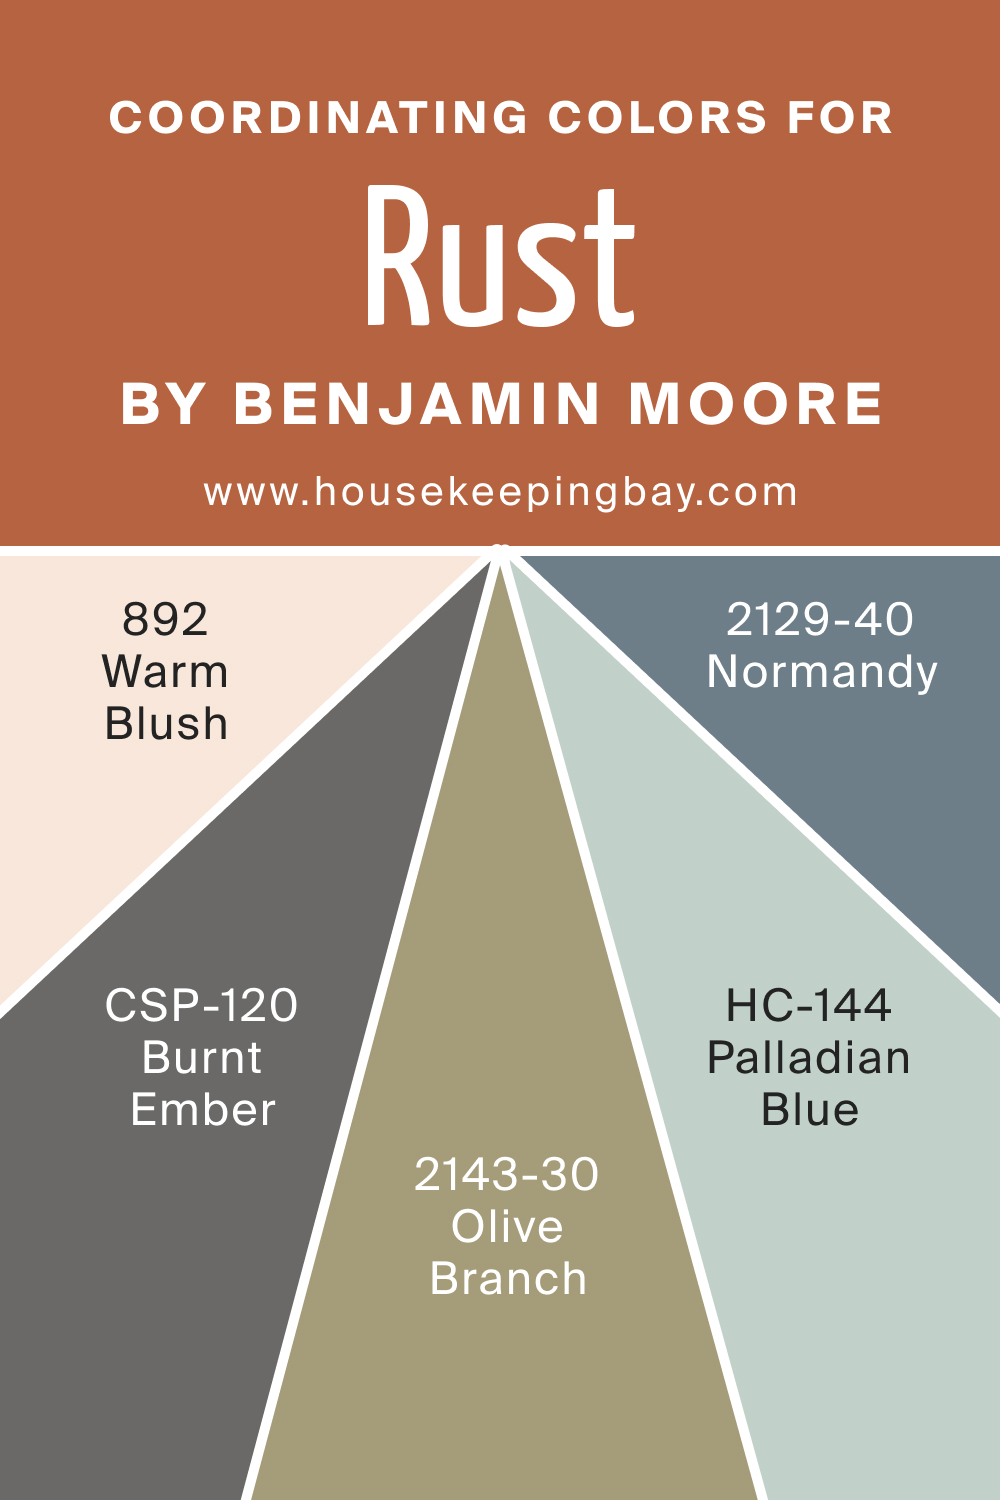 Coordinating Colors of BM Rust 2175-30